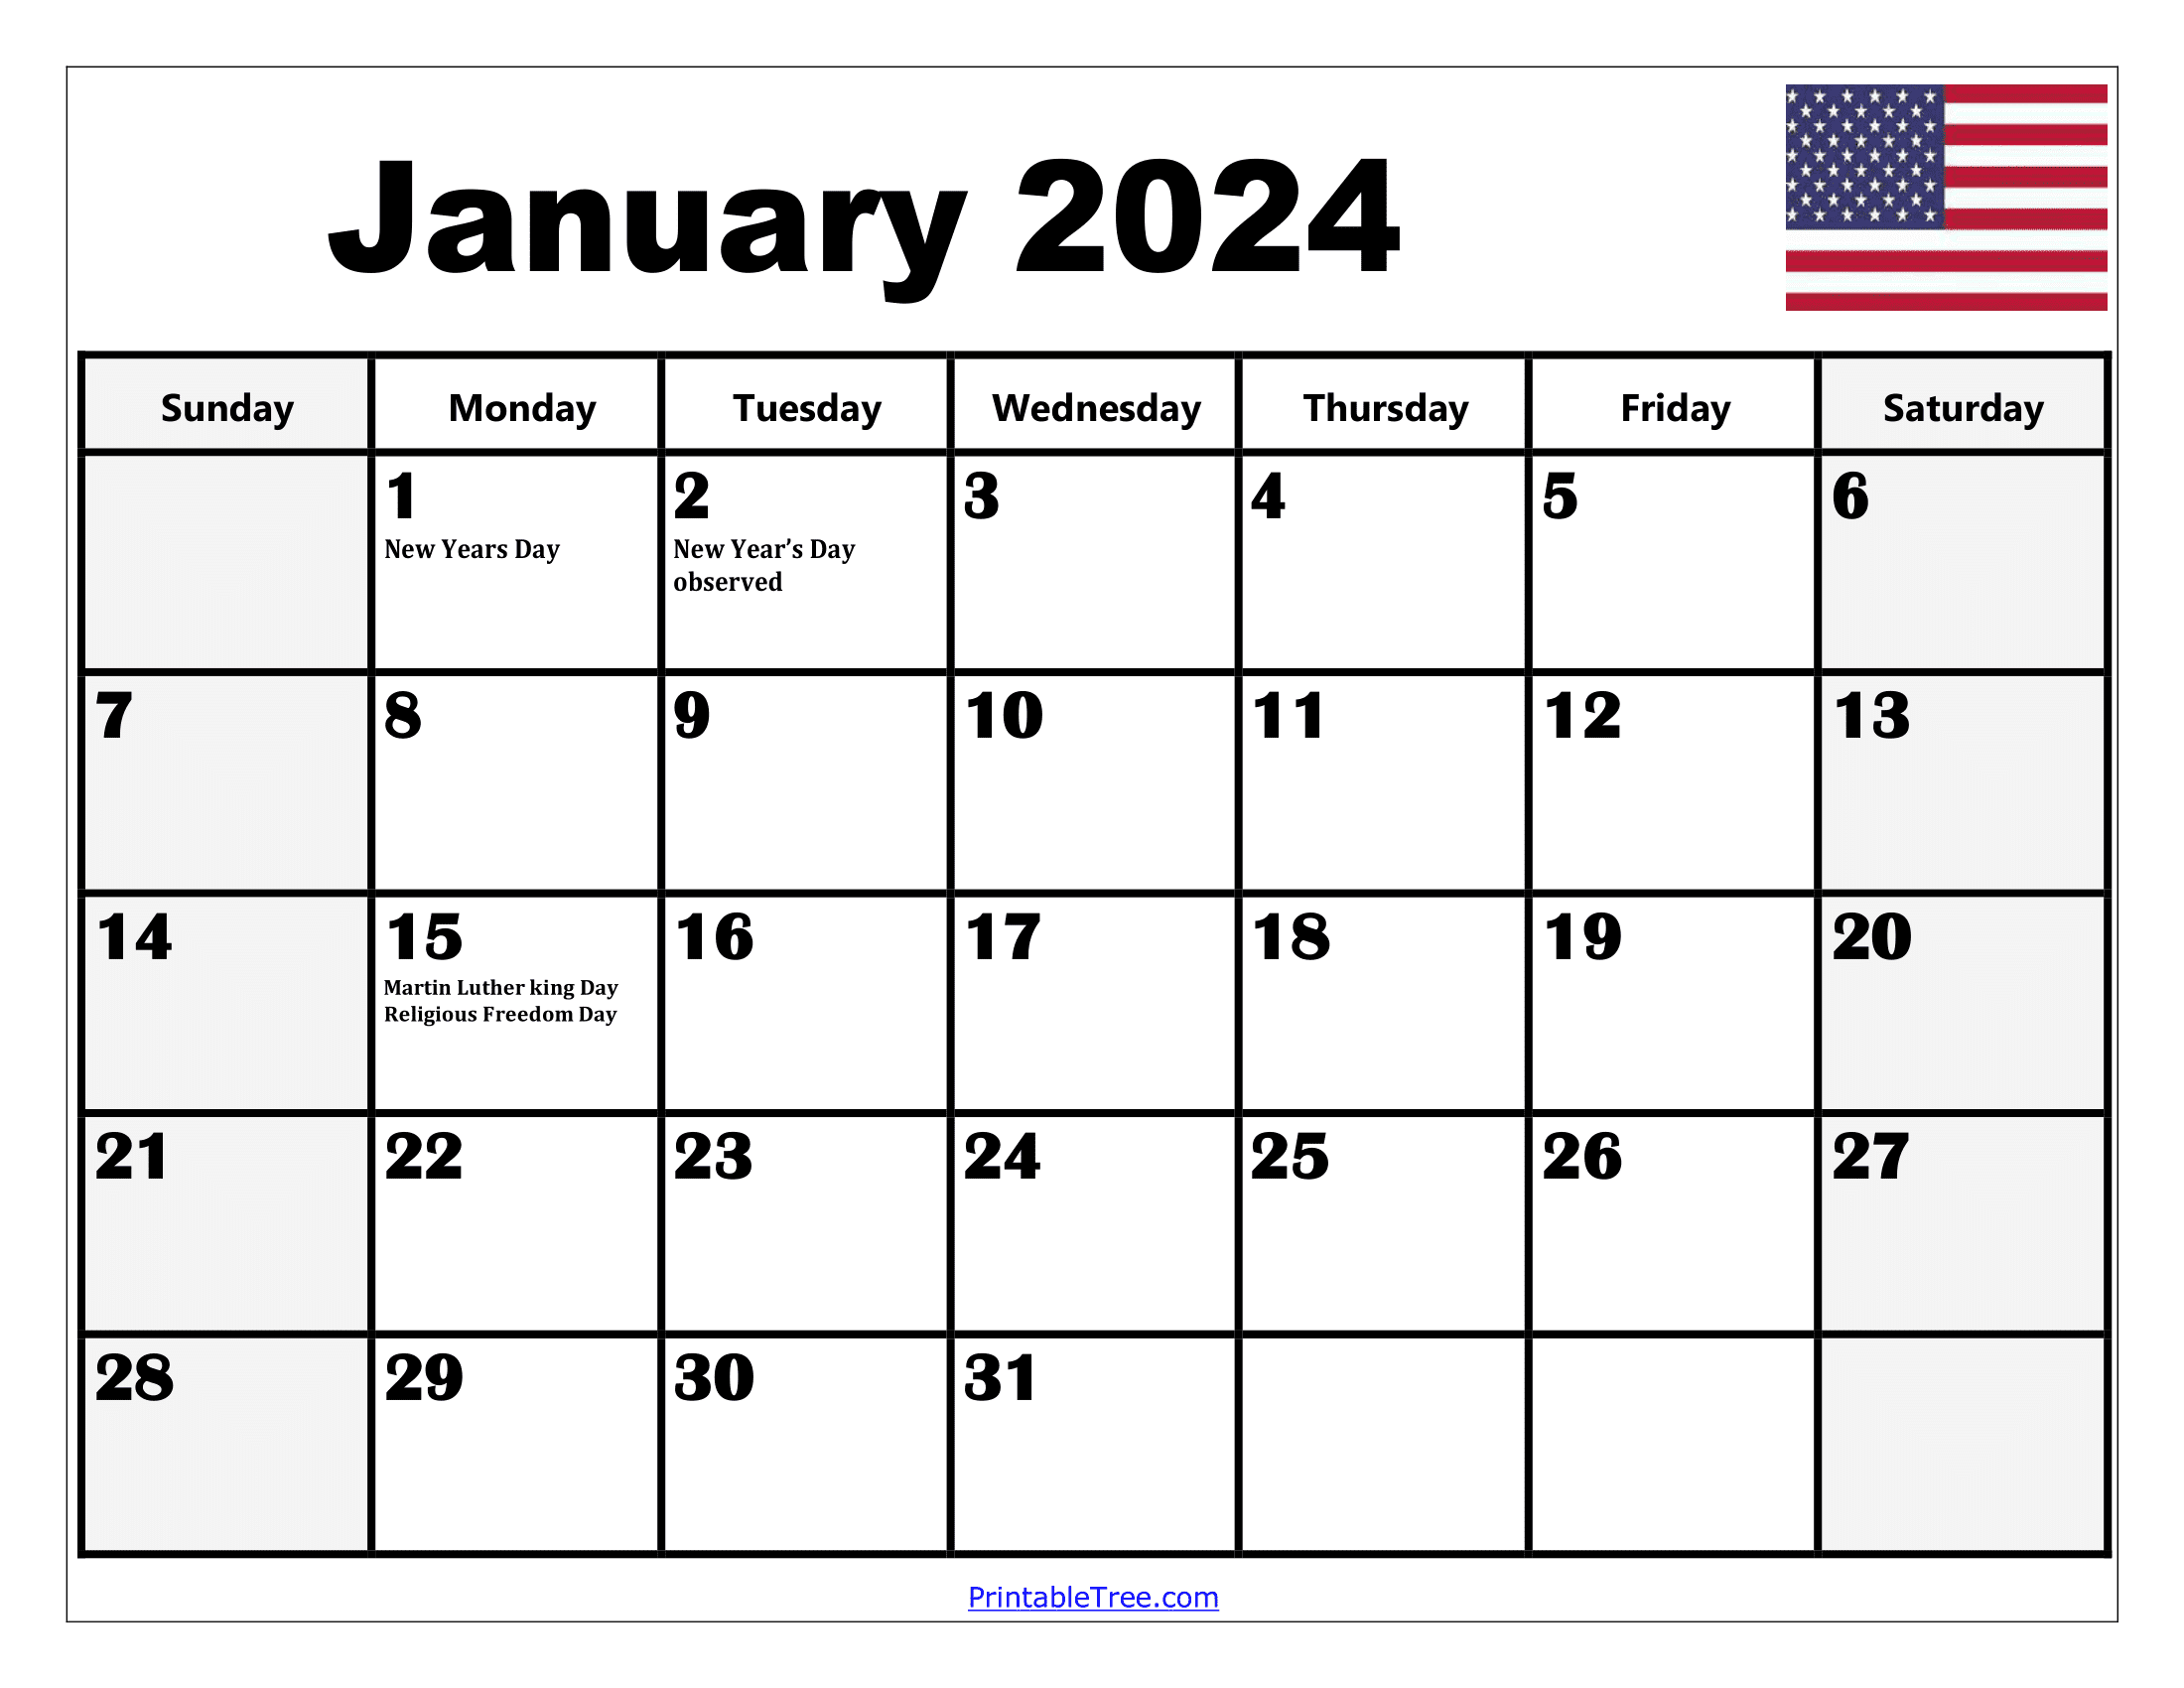 January 2024 Calendar Printable Pdf Template With Holidays for Jan 2024 Calendar With Holidays Printable